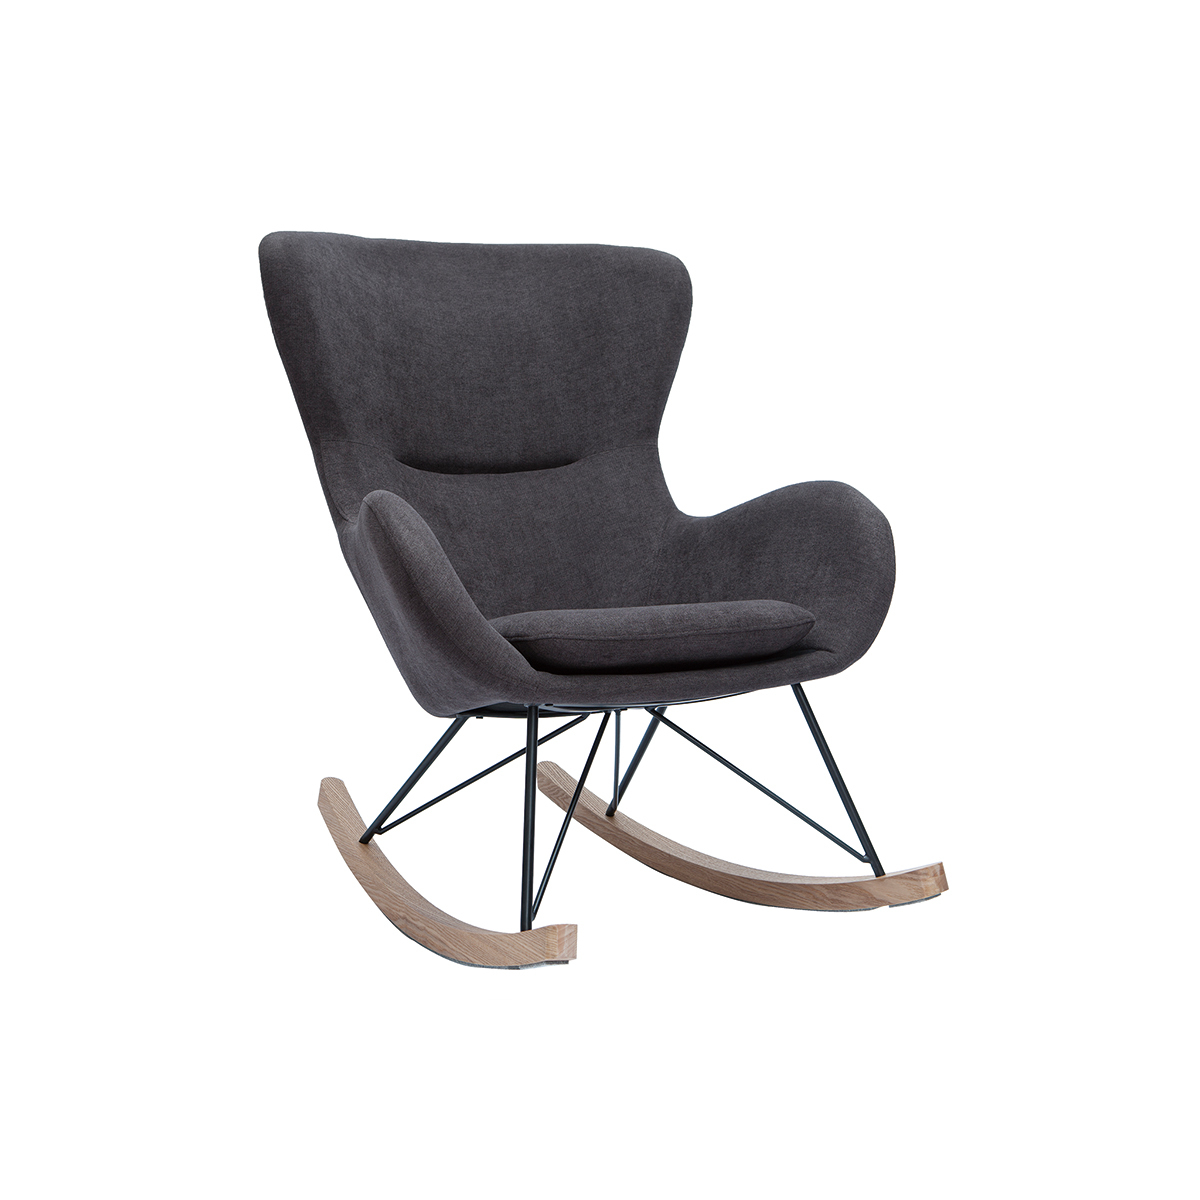 Rocking chair design effet velours gris ESKUA vue1